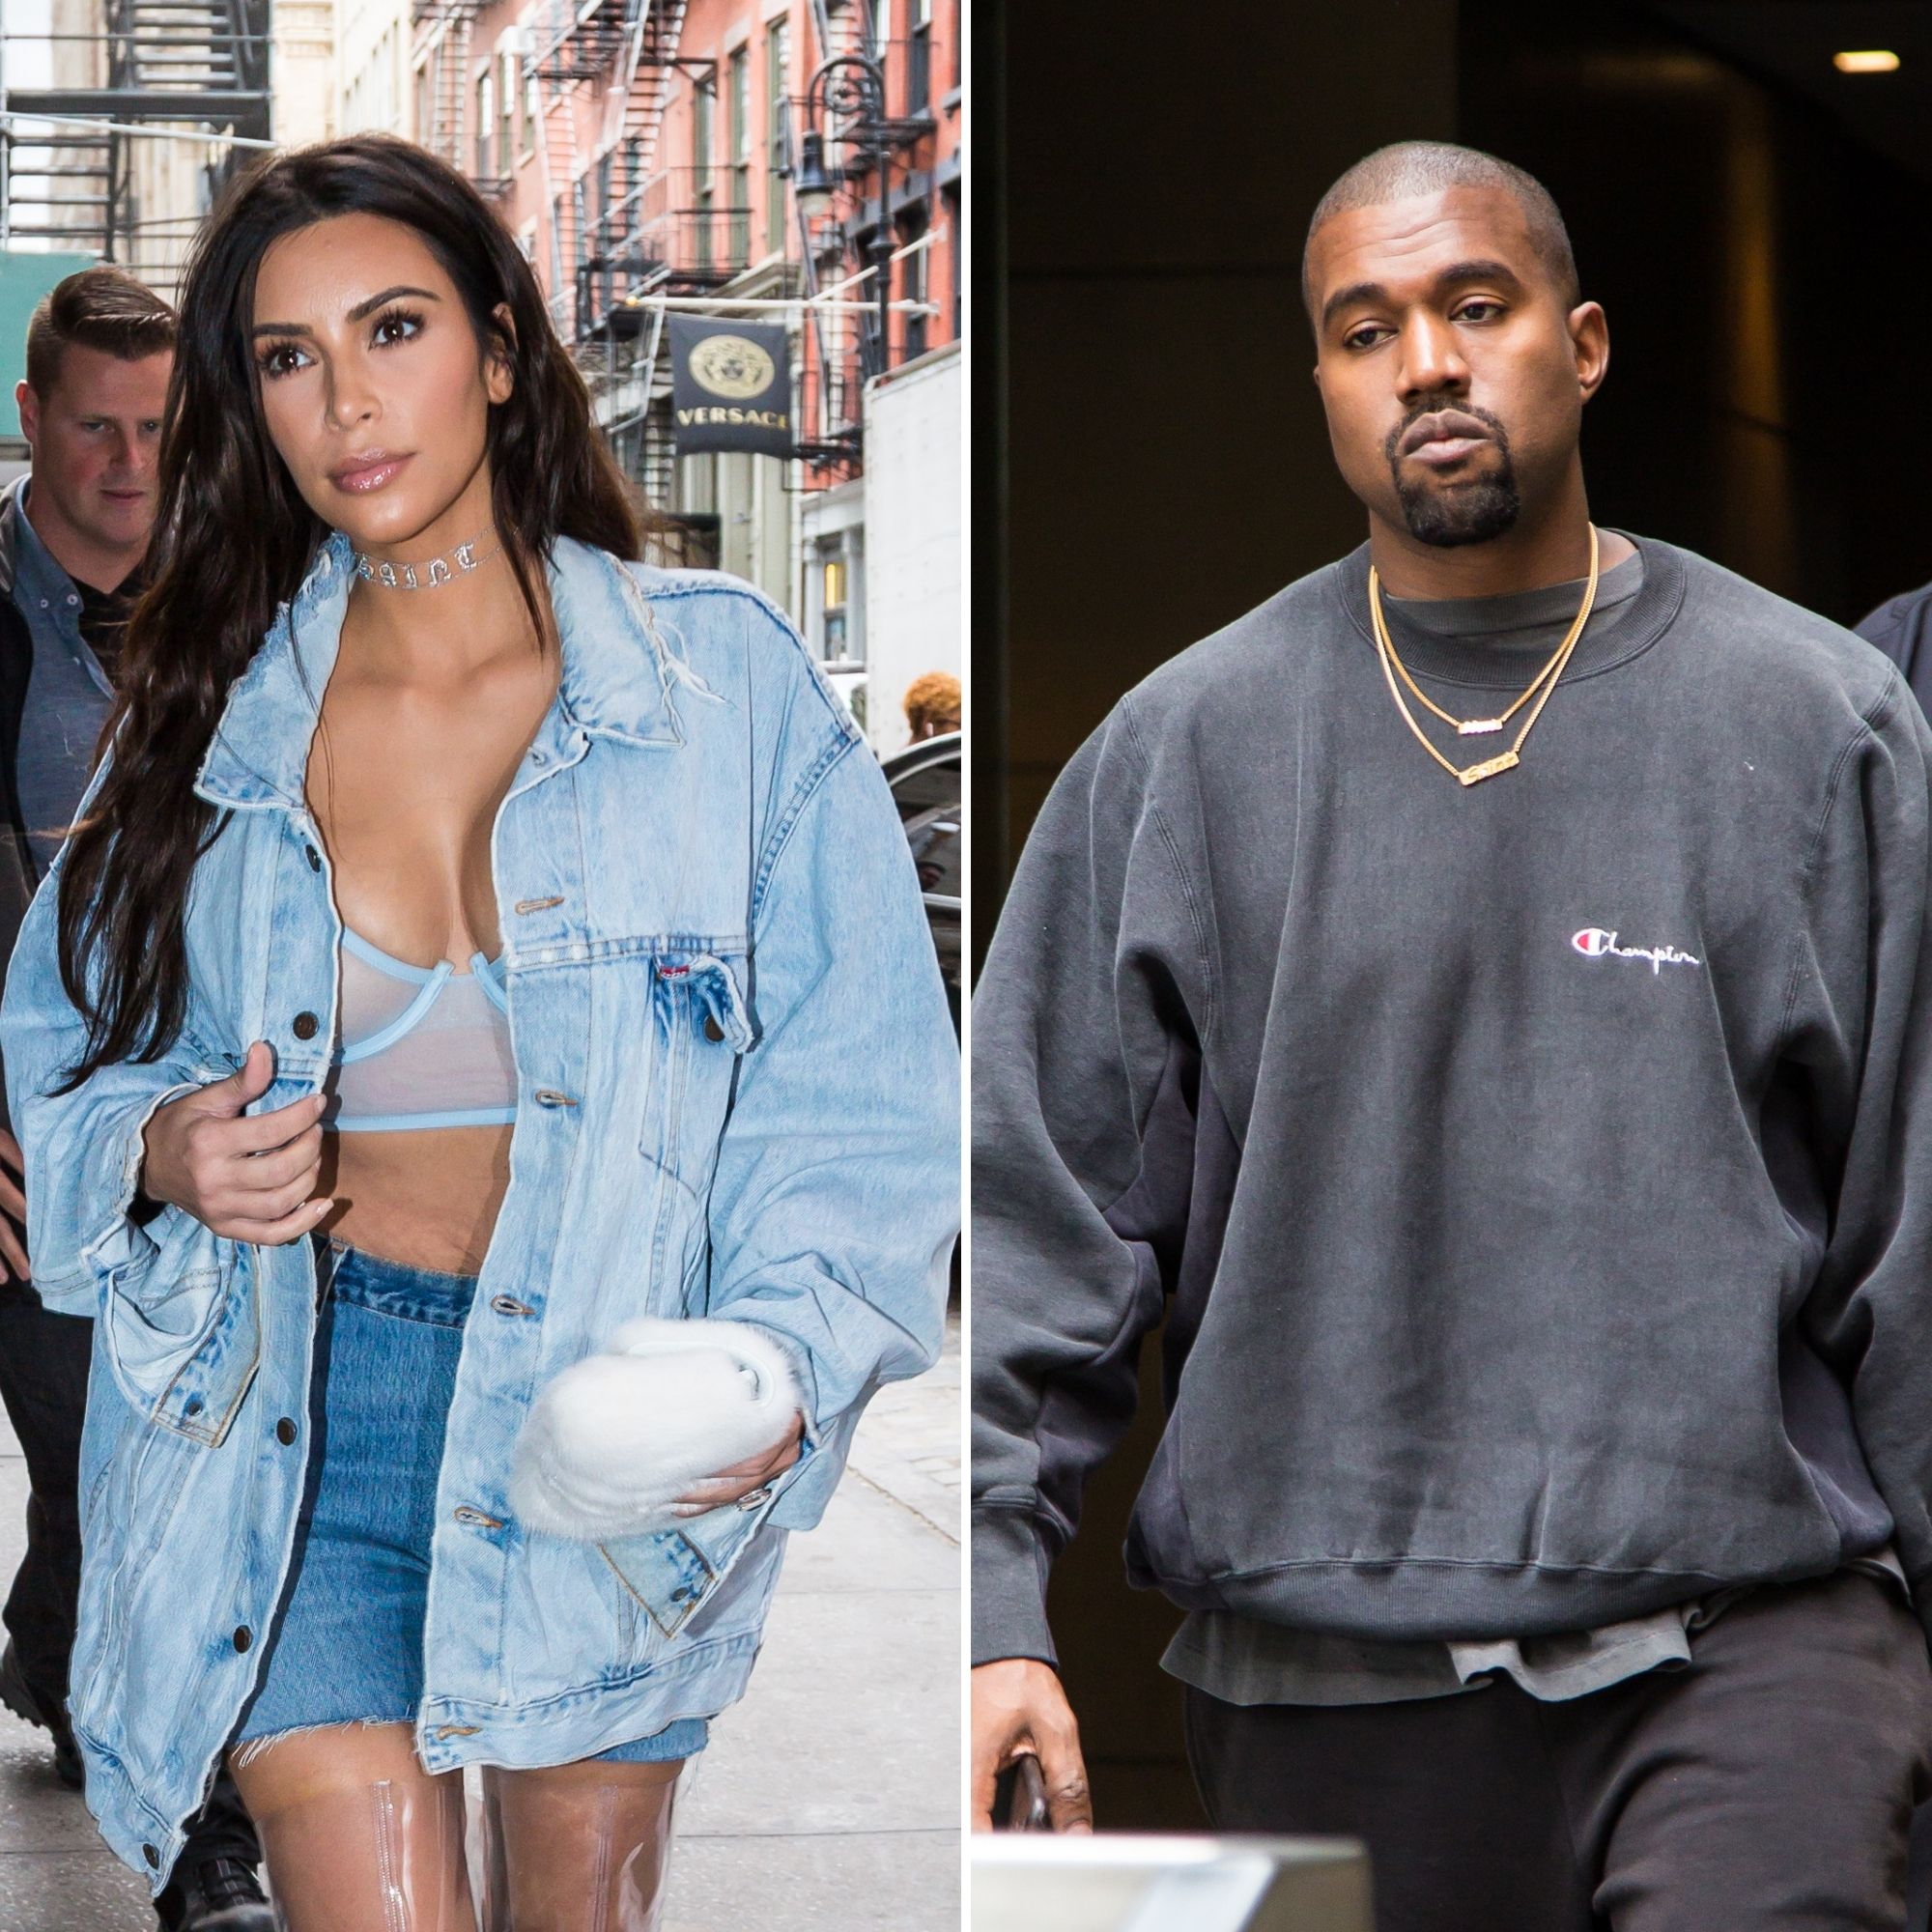 Kim Kardashian shares birthday post for Kanye West amid split rumours